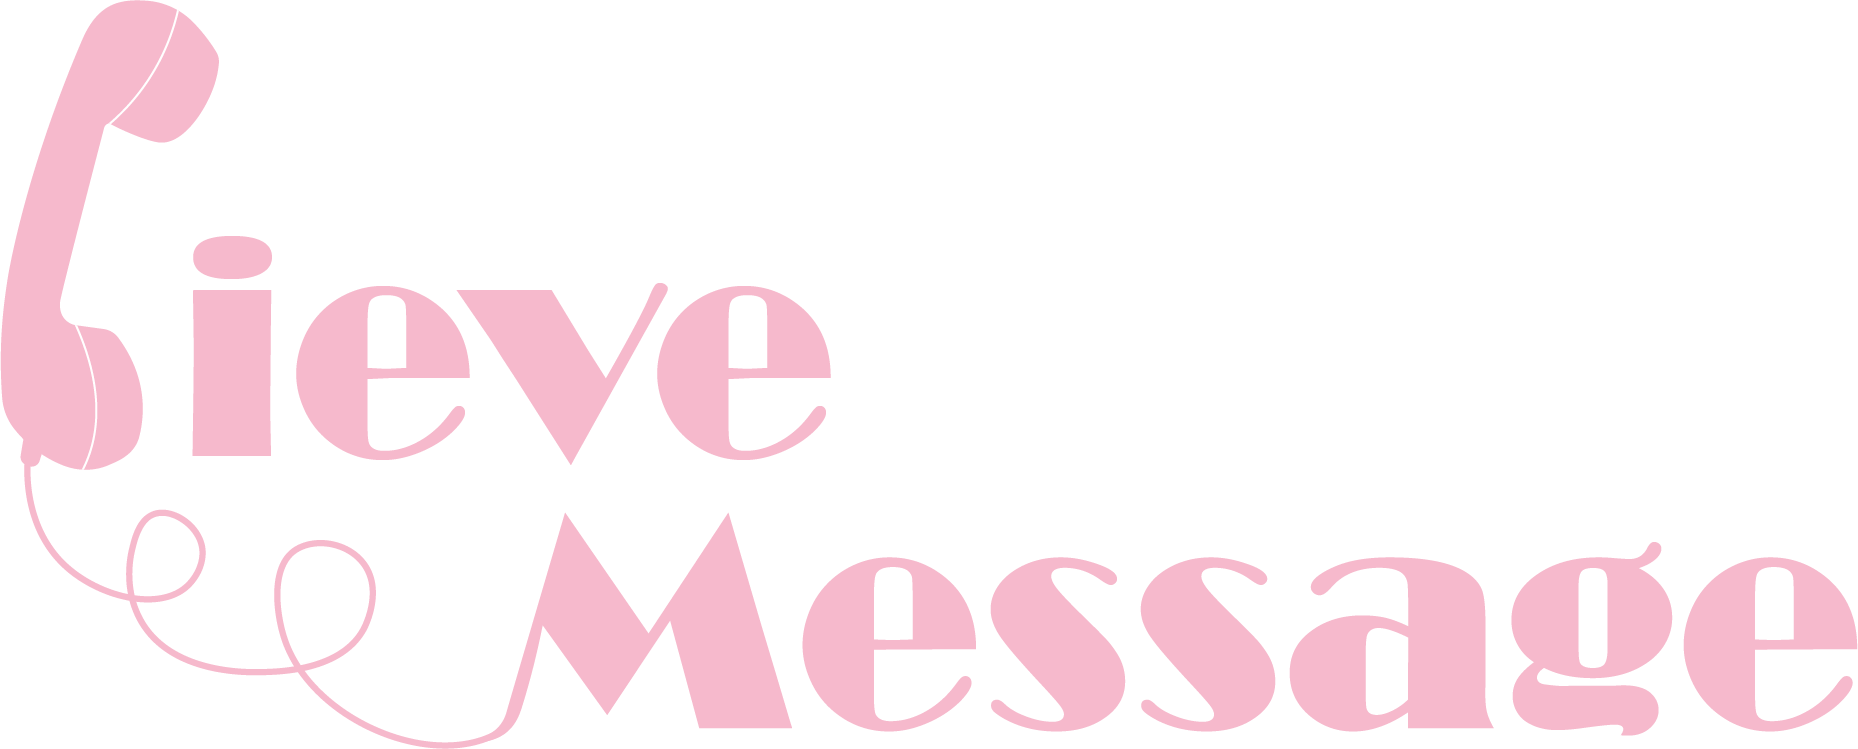 Lieve Message logo roze